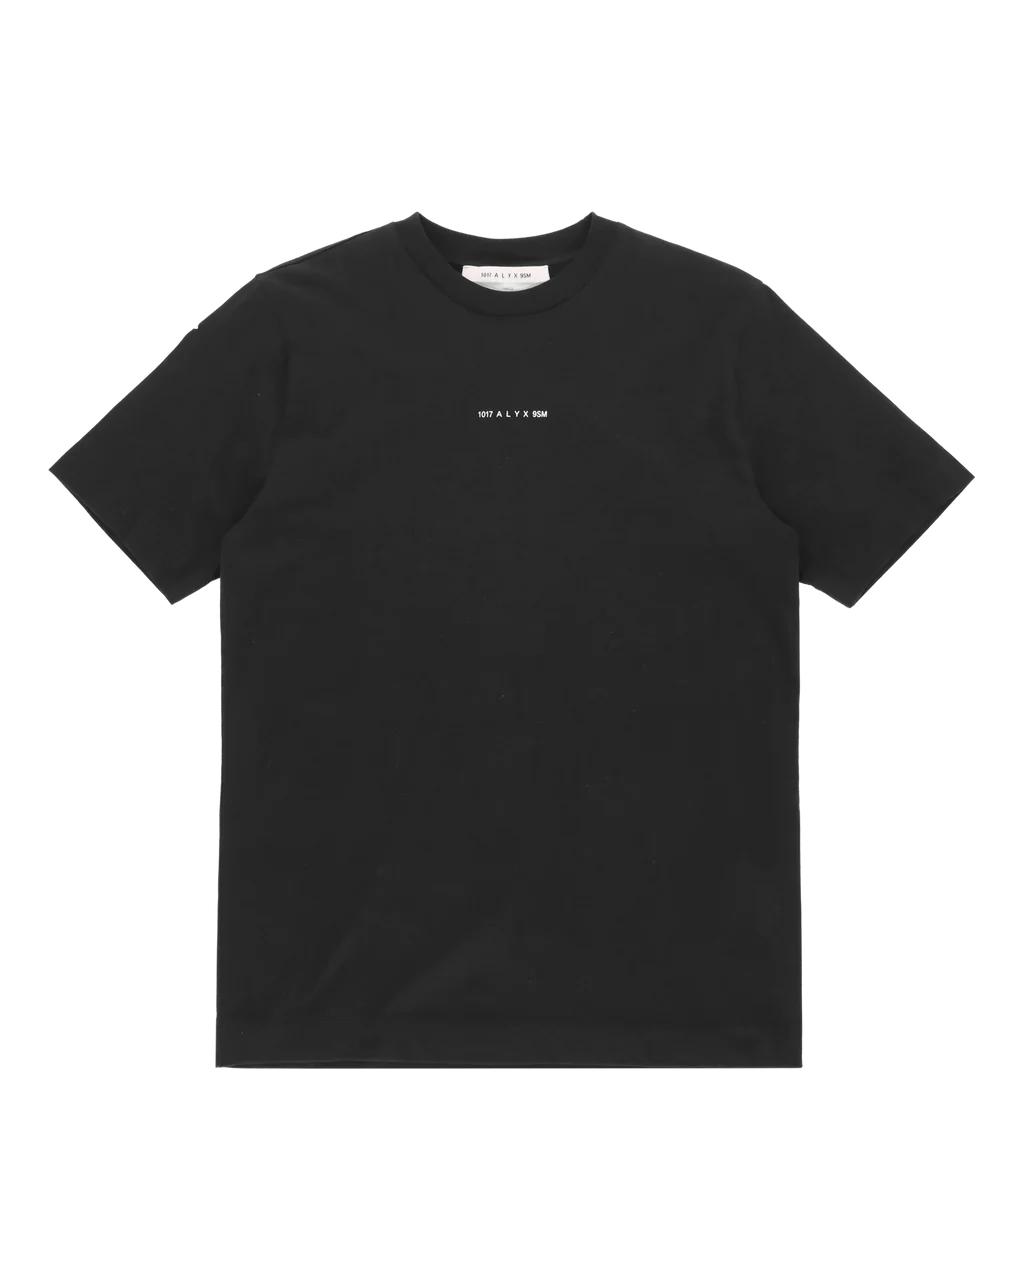 Alyx Men's Graphic S/S T-Shirt (Black) by ALYX